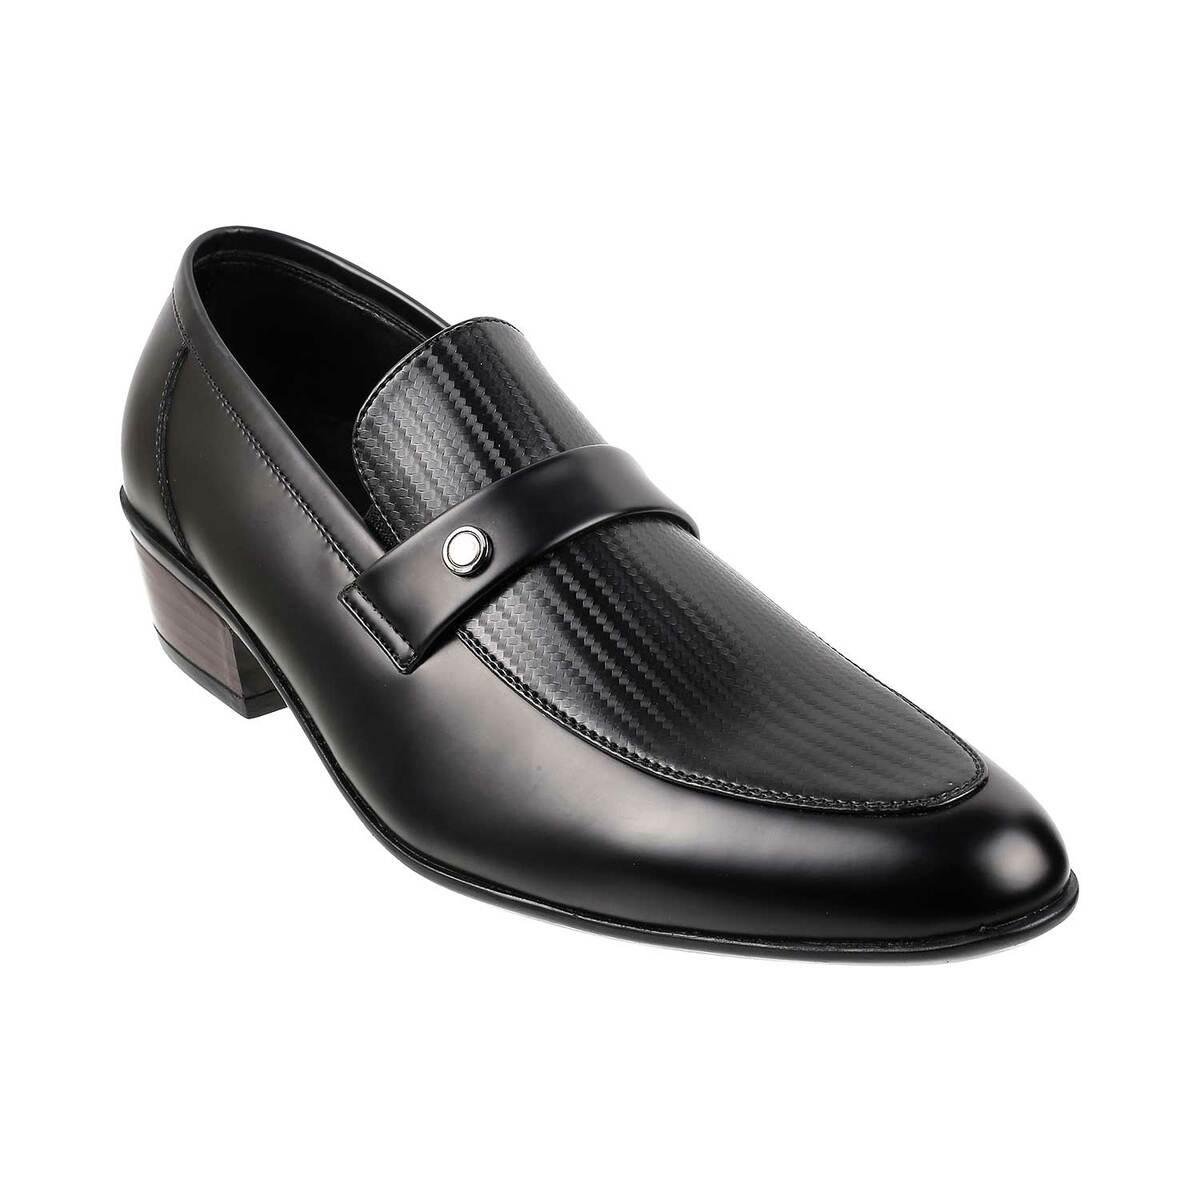 Buy Metro Black Formal Moccasin Online | SKU:19-6827-11-40 - Metro Shoes